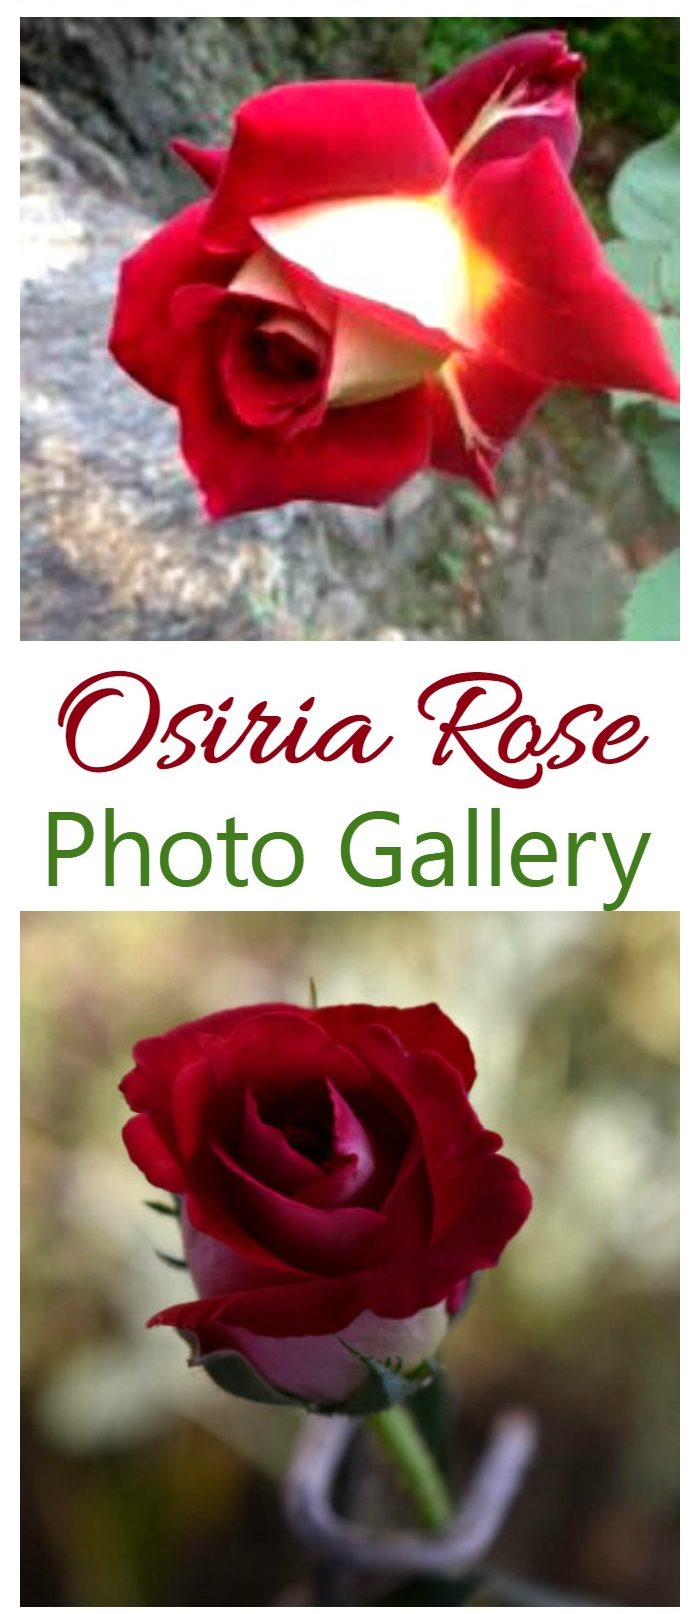 Osiria Rose Photo Gallery ng This Hard to Find Hybrid Tea Rose